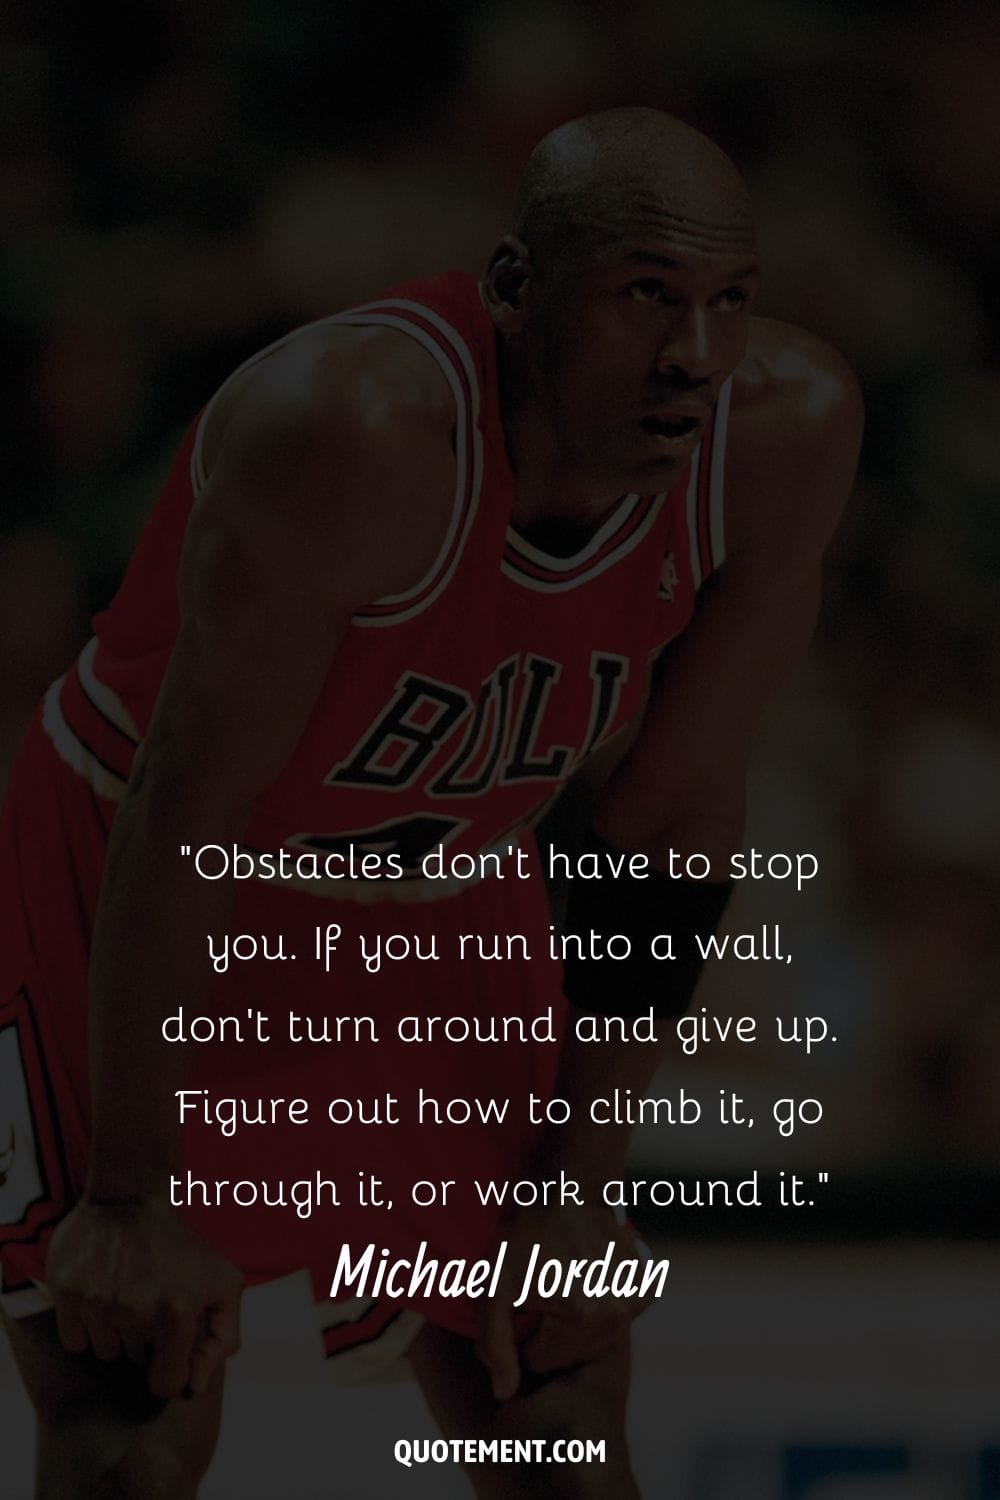 Michael Jordan leaning on knees during a game representing Michael Jordan inspirational quote